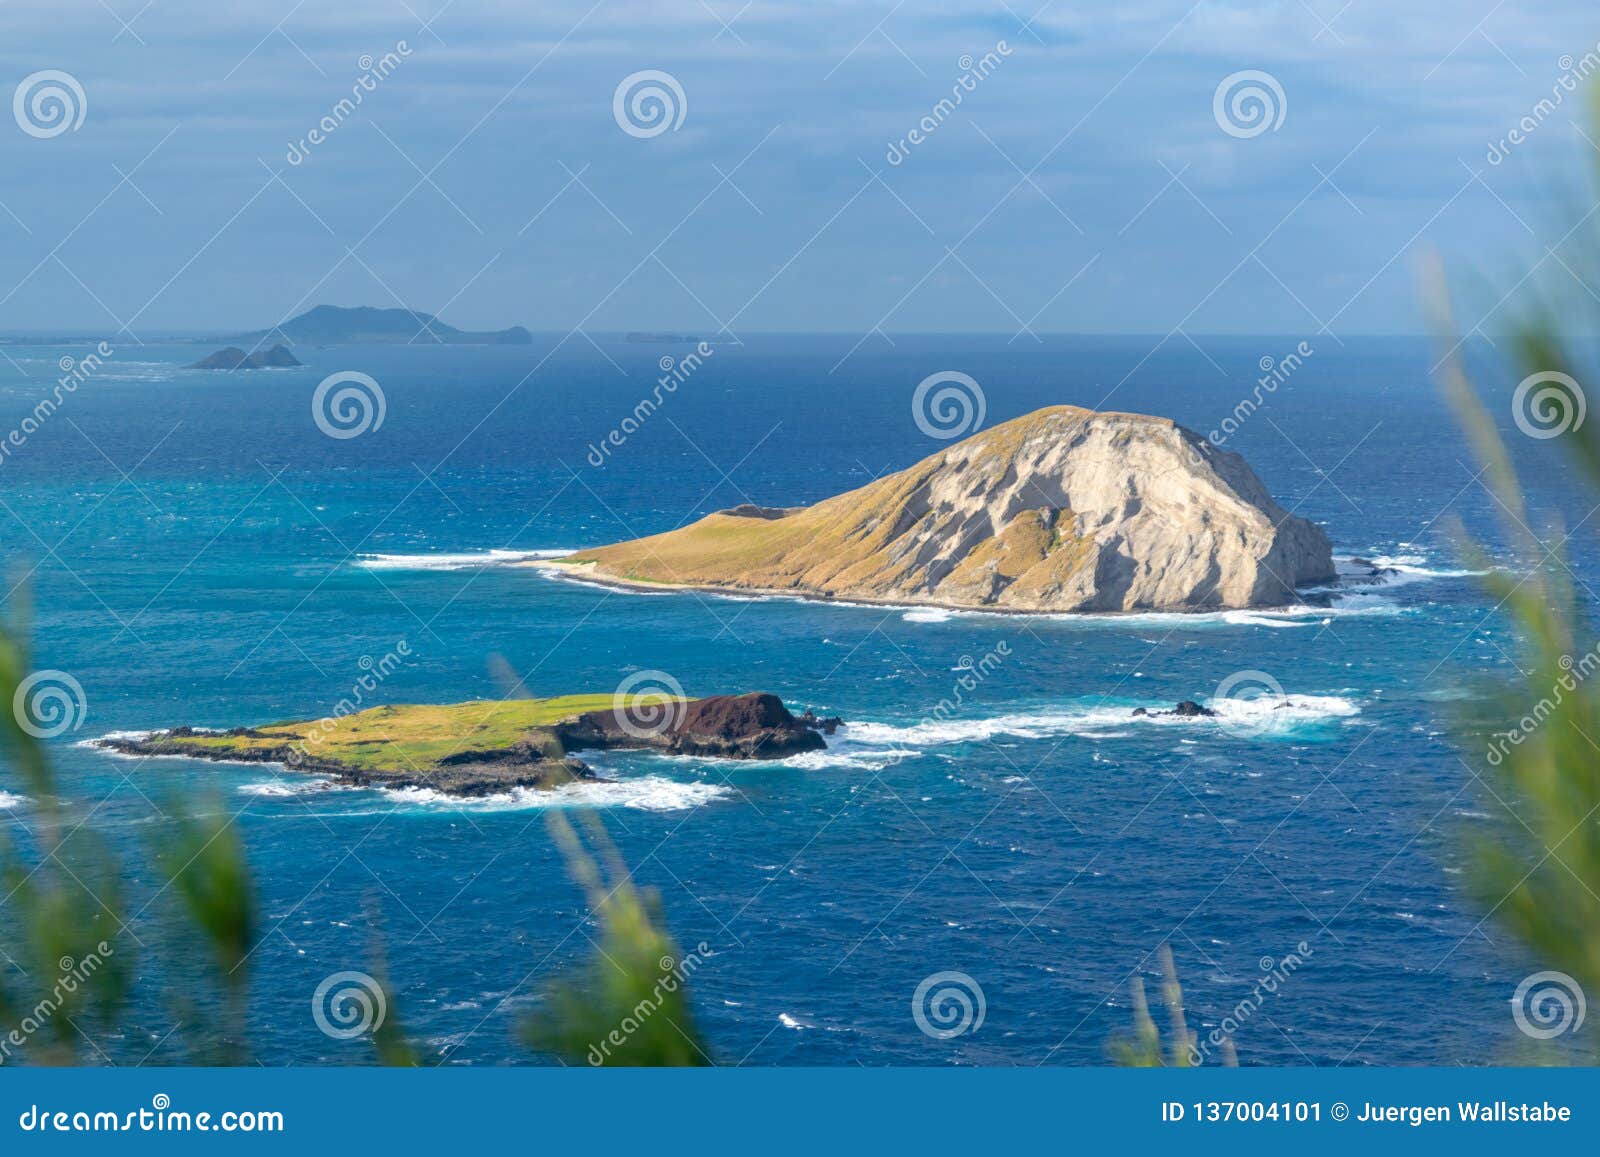 view of rabbit island mÃÂnana island, an uninhabited islet located 1.2 km off kaupÃÂ beach & waimanalo at the eastern end of the i